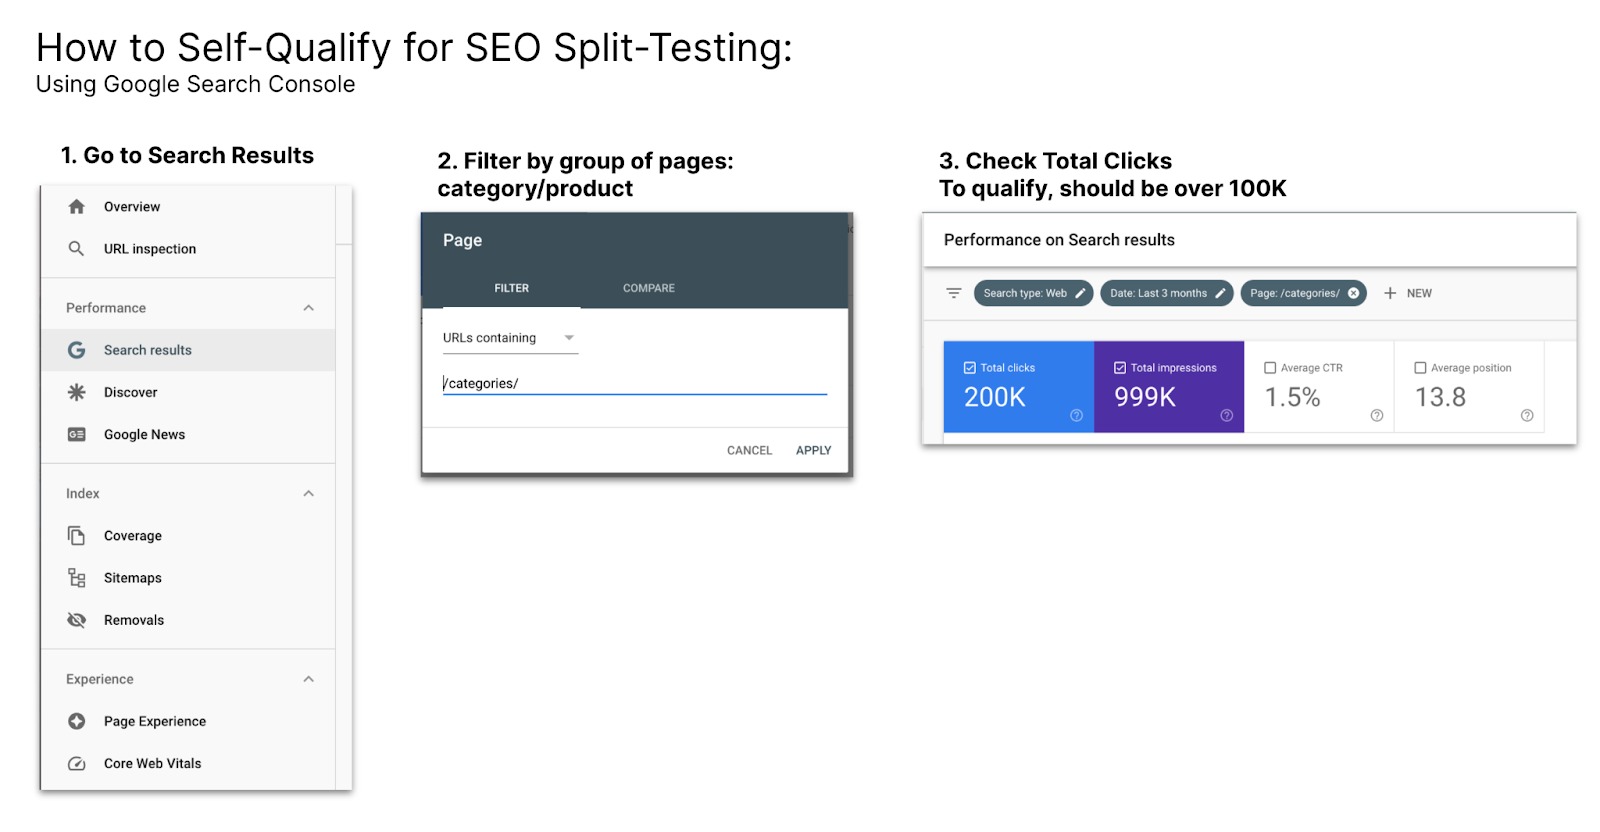 SEO Split-Testing: Is My Website a Good Fit? image 1